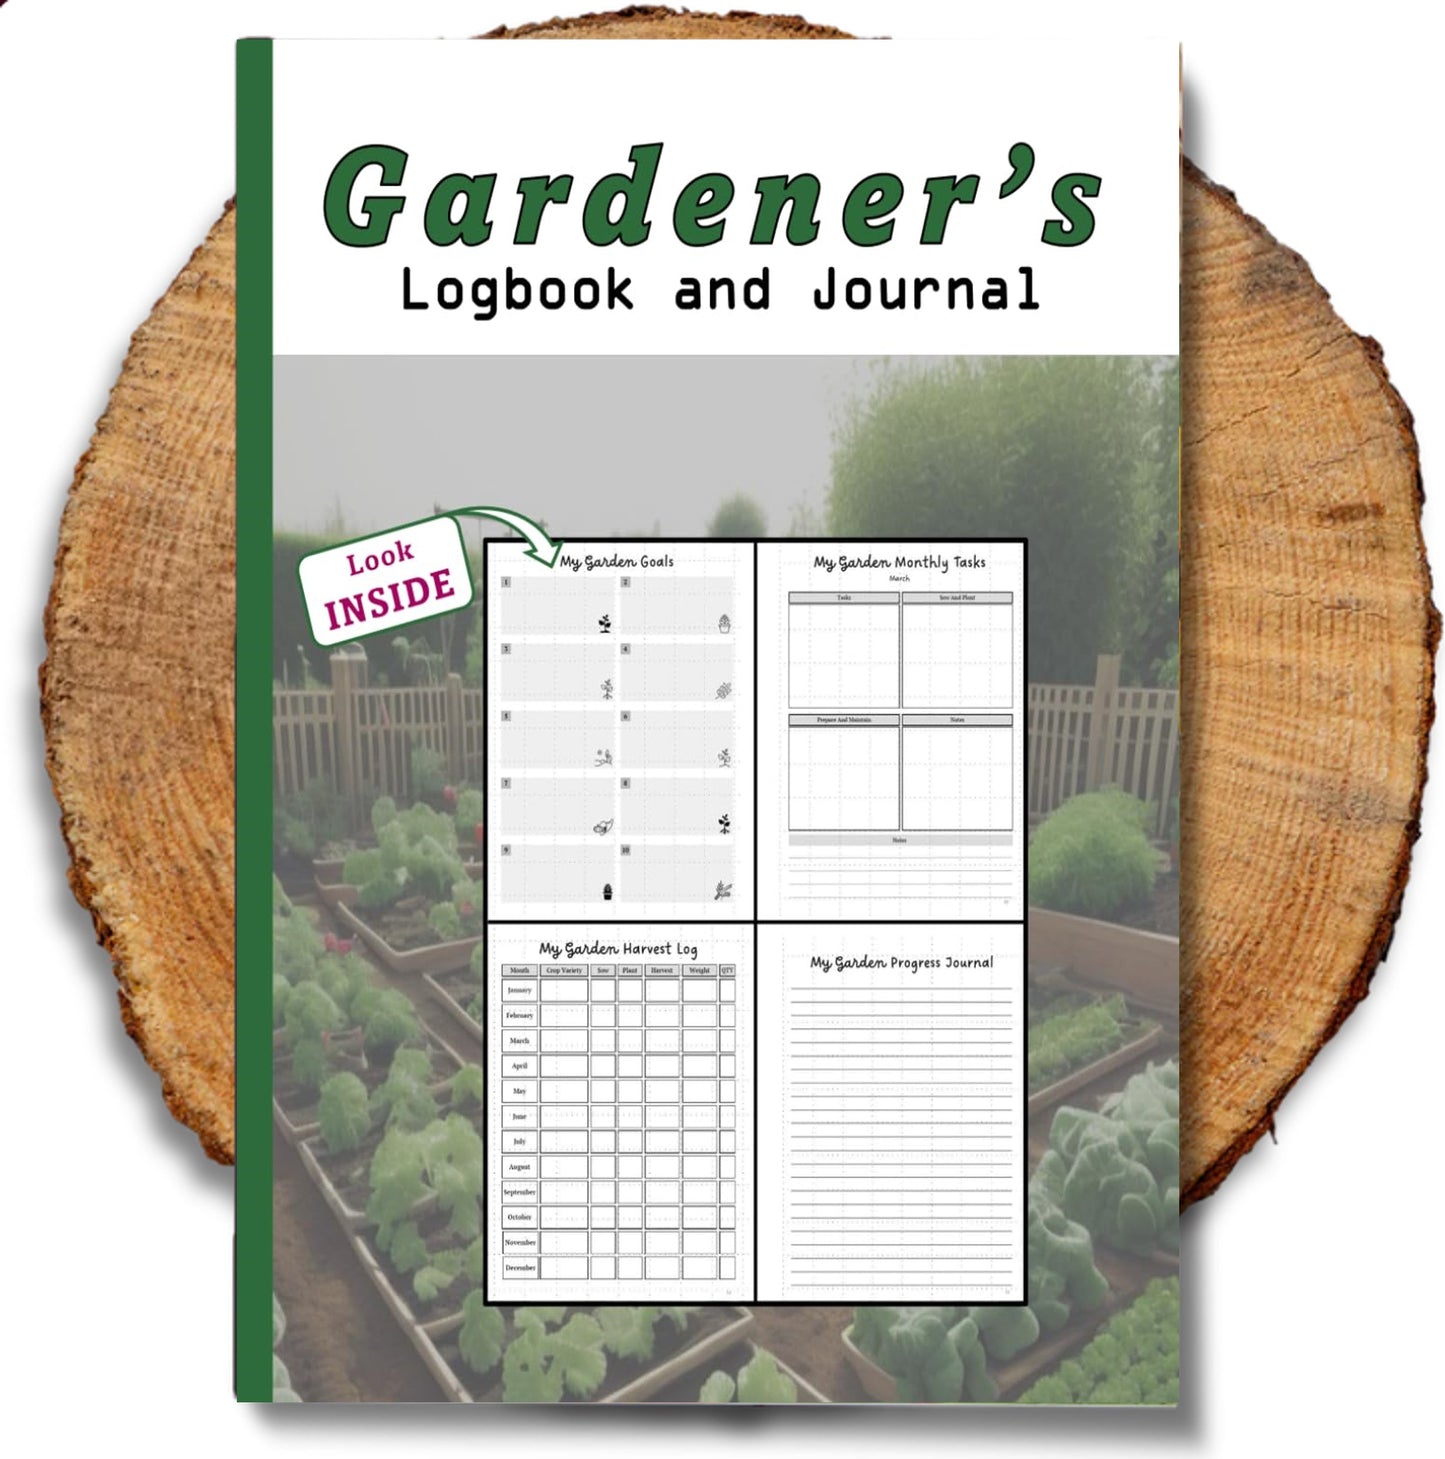 Gardener's Logbook and Journal